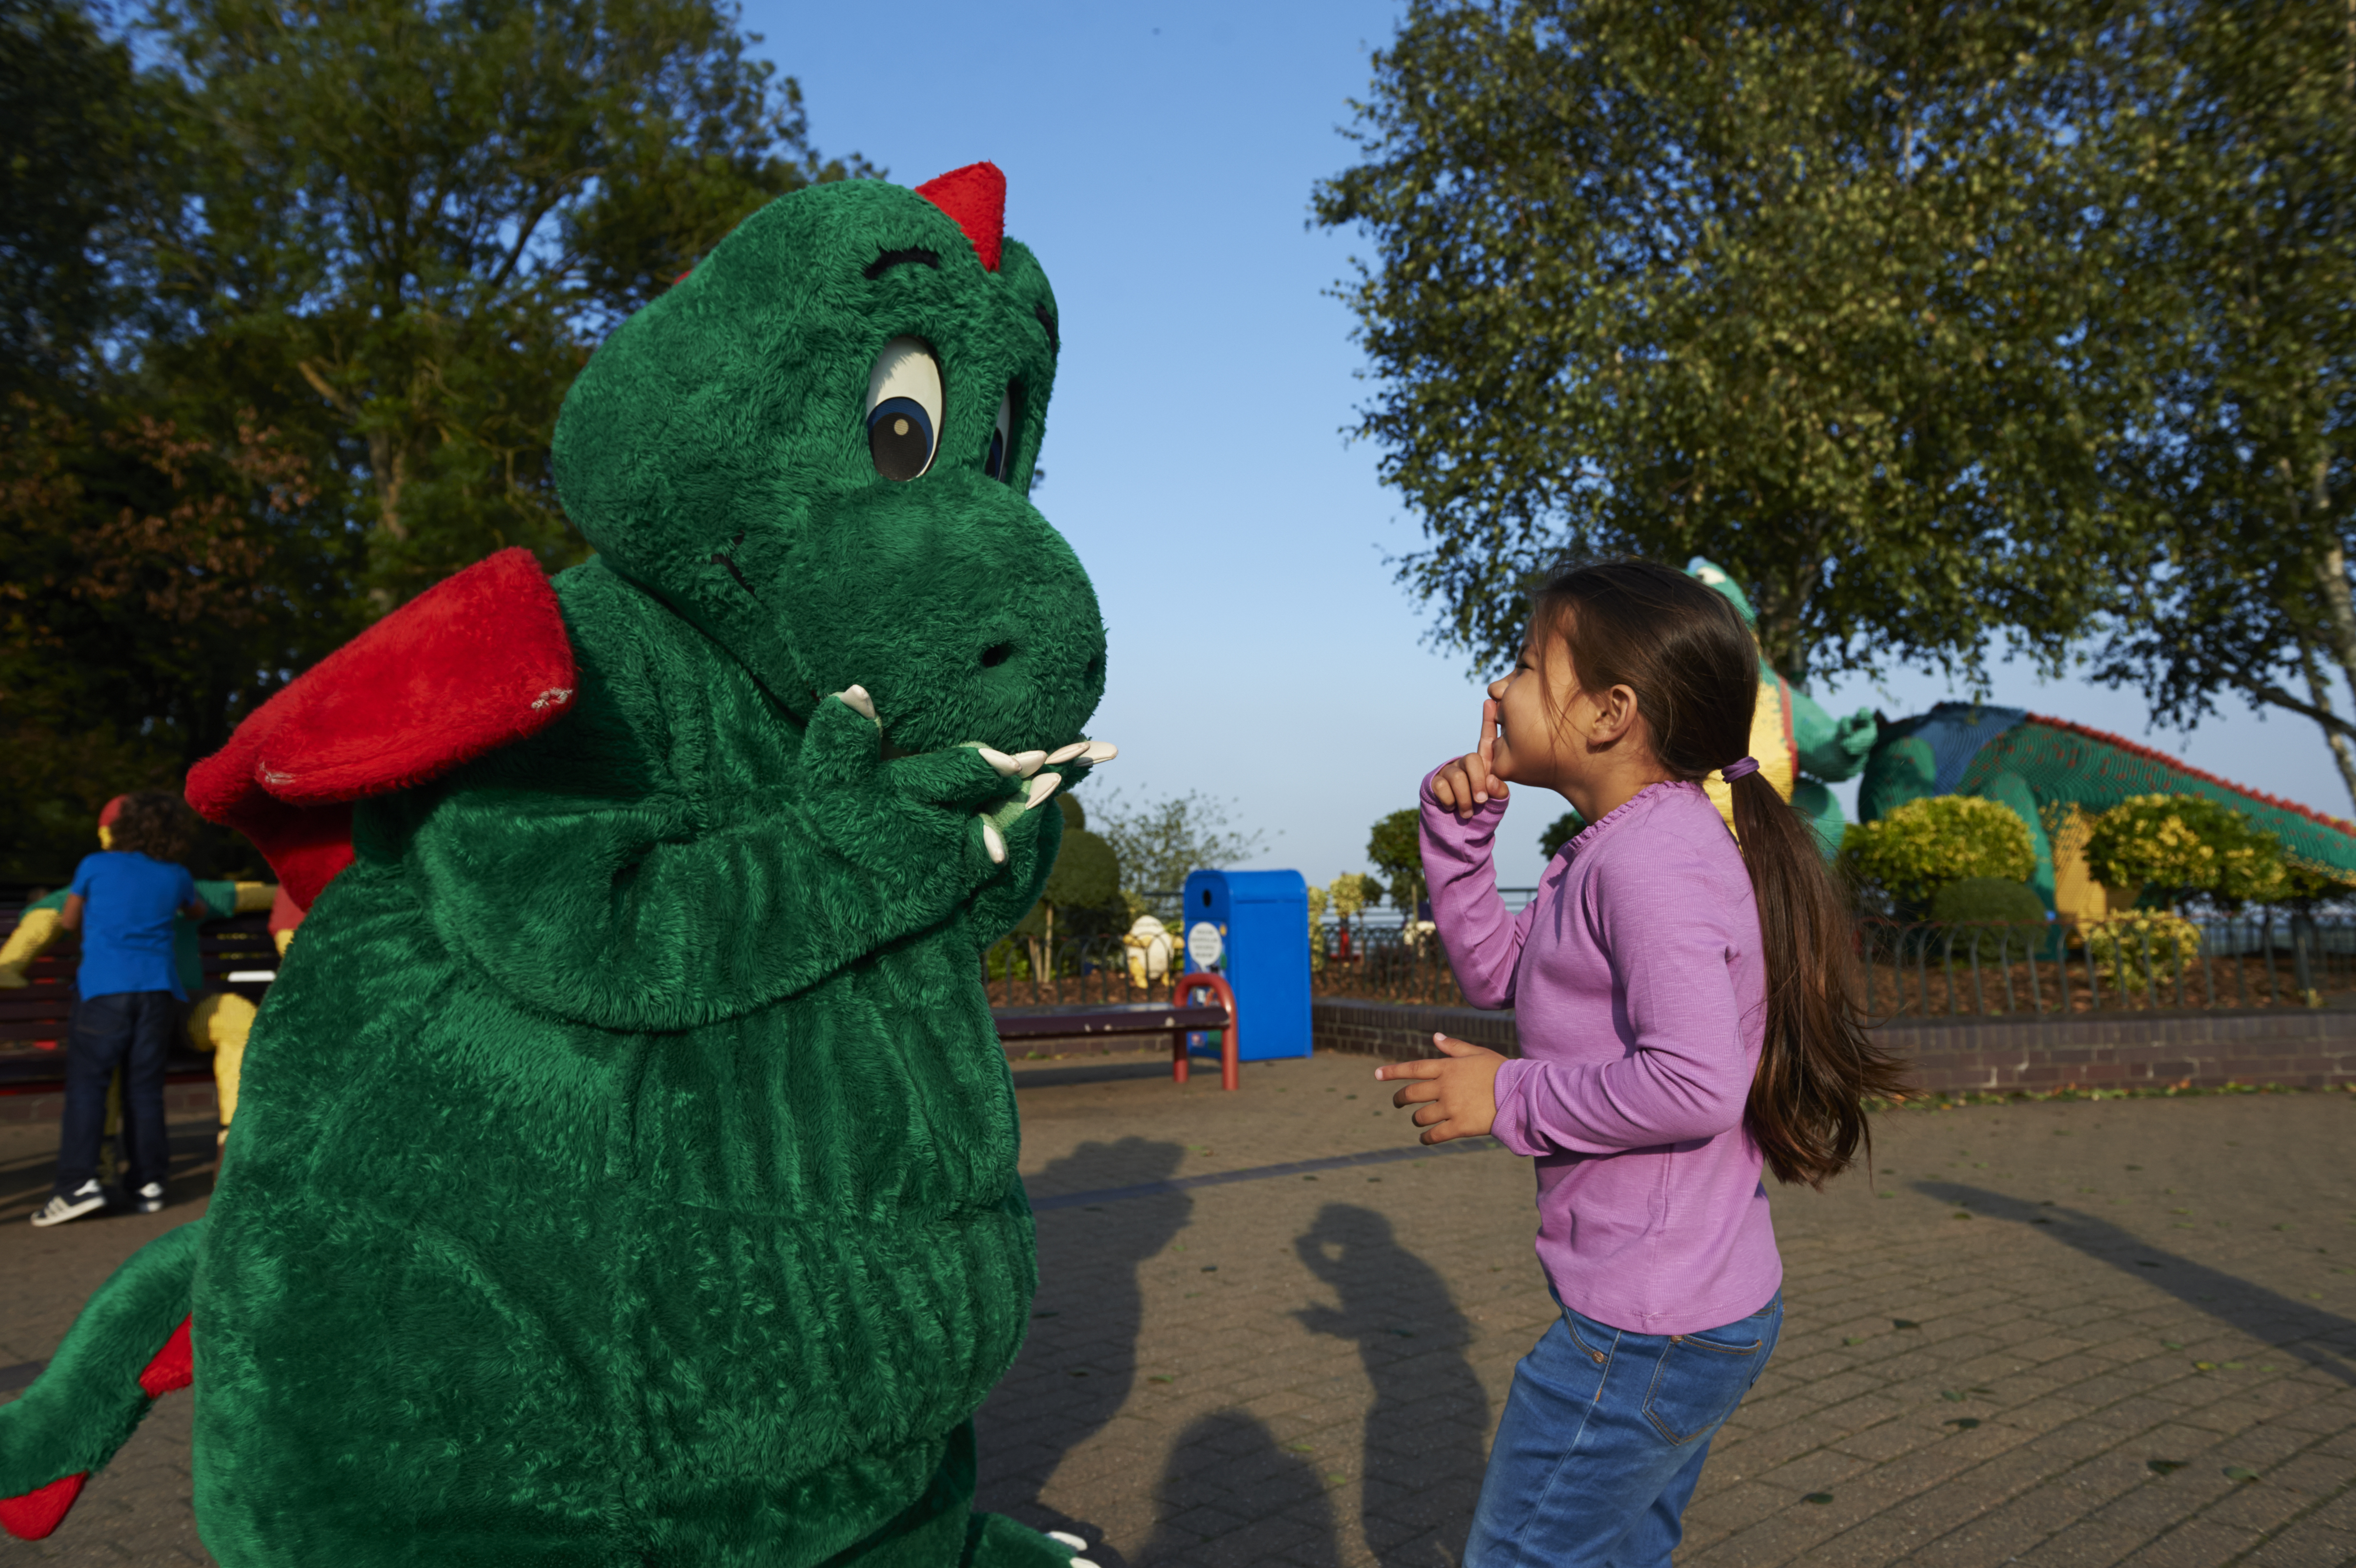 Girl meeting Ollie the Dragon